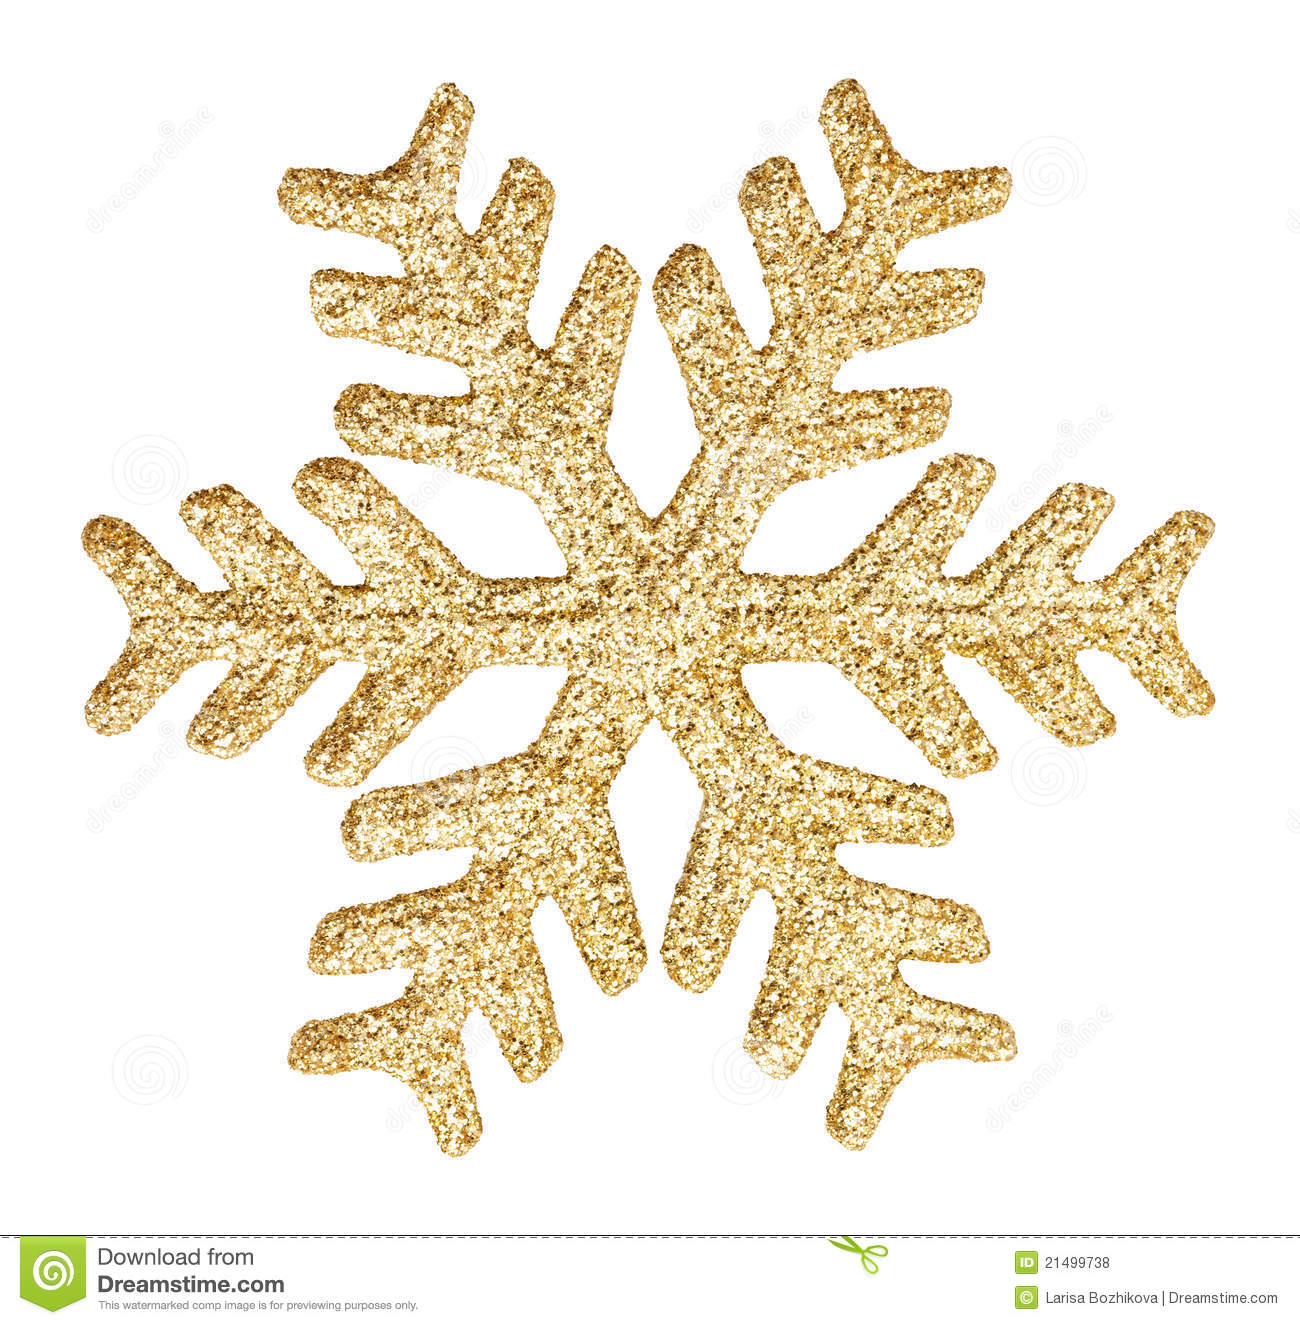 Gold Glitter Snowflake Royalty Free Stock Photos   Image  21499738